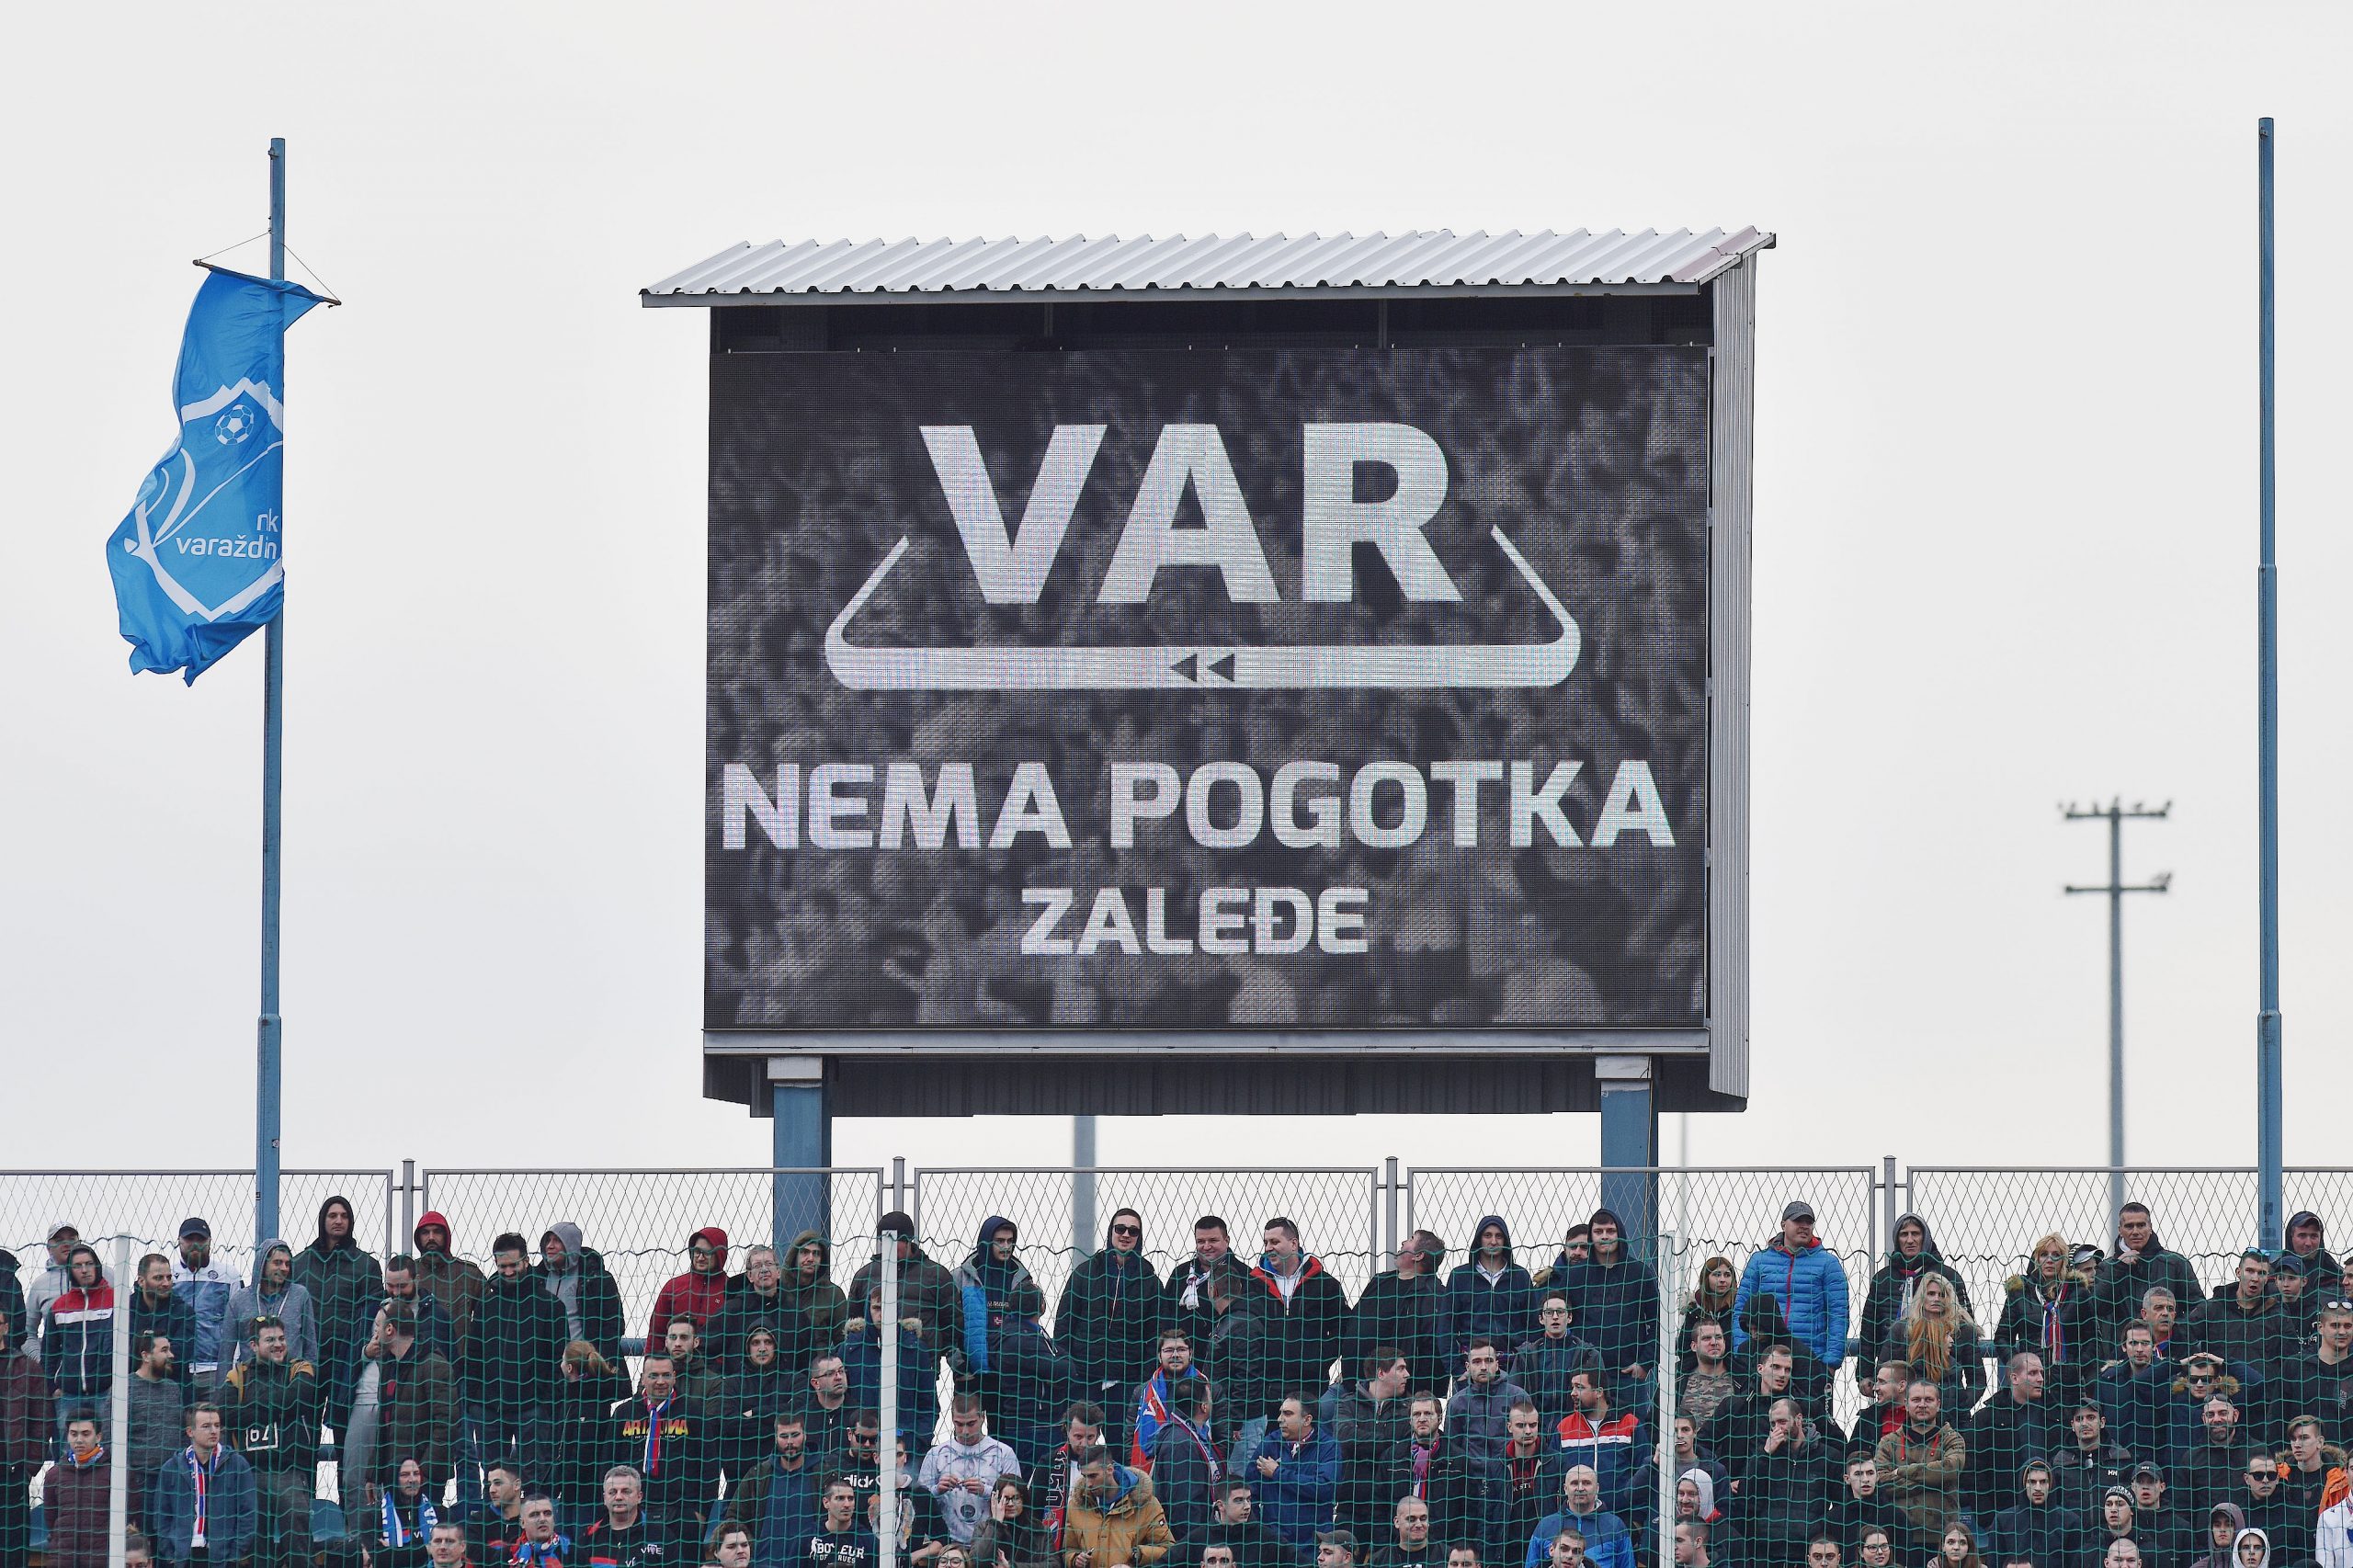 02.02.2020., stadion Andjelko Herjavec, Varazdin - Hrvatski Telekom Prva liga, 20. kolo, NK Varazdin - HNK Hajduk. Photo: Vjeran Zganec Rogulja/PIXSELL